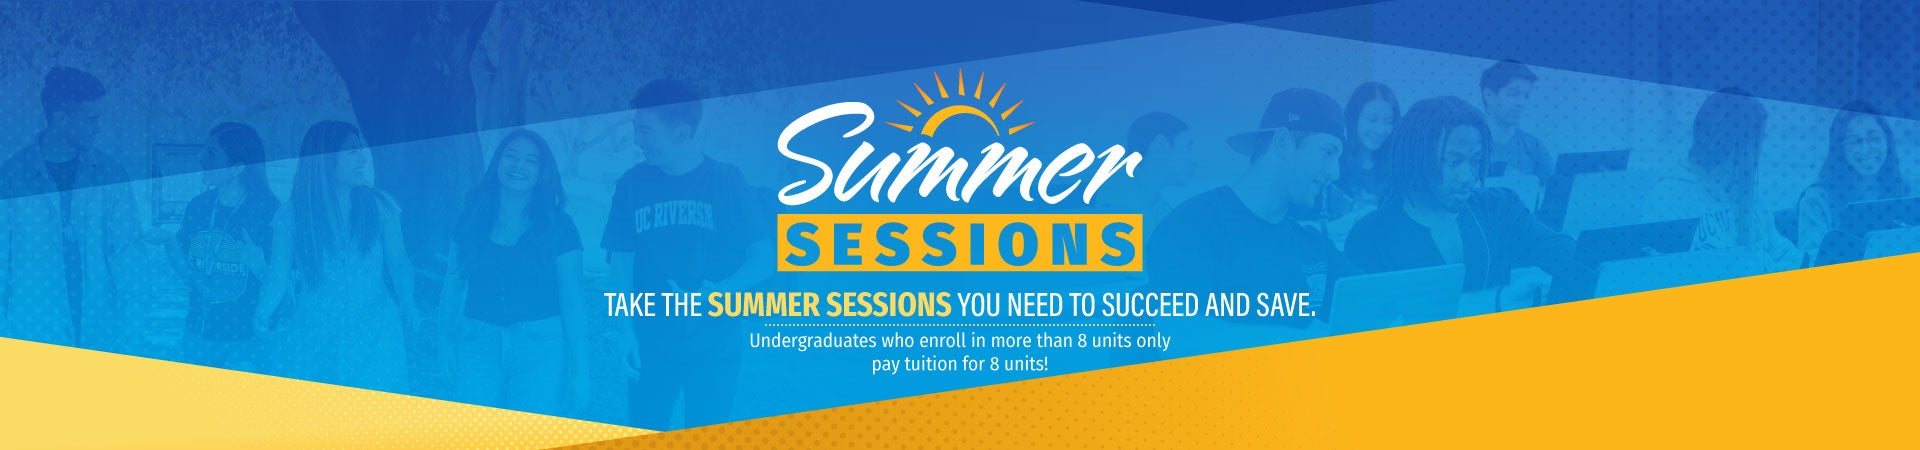 UCOMM_SP22_Summer-Sessions_web-banner_FINAL